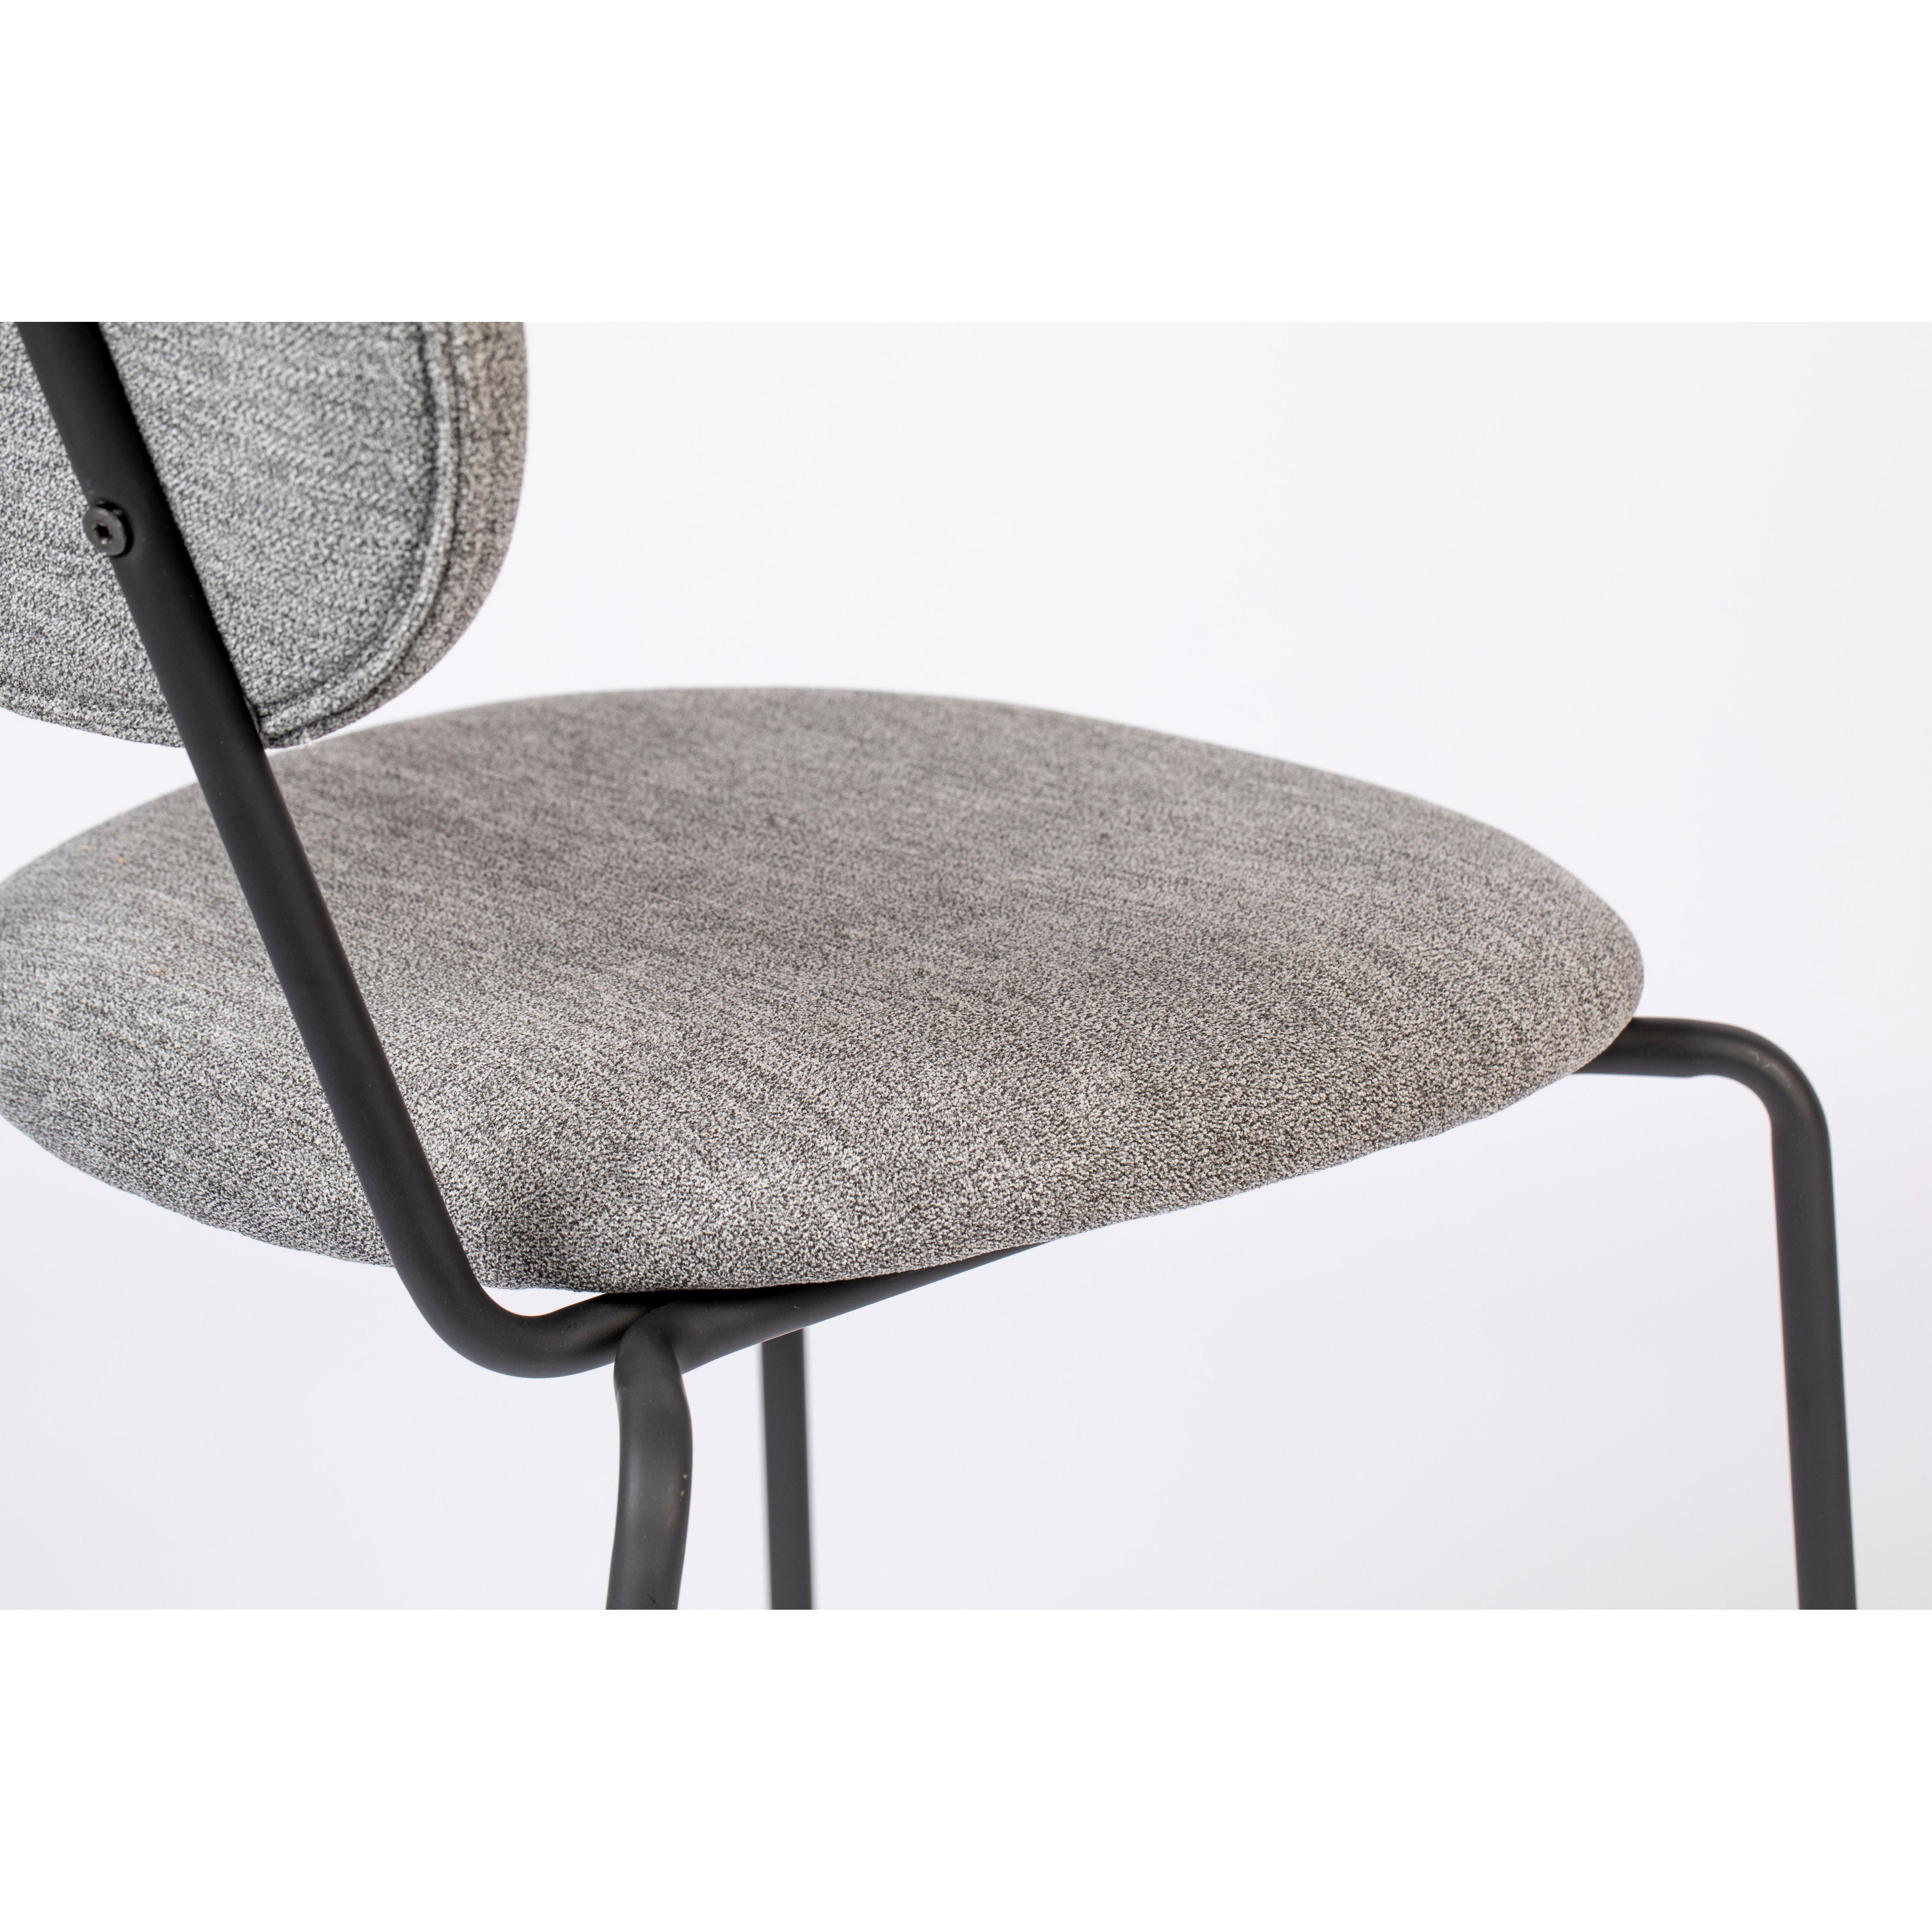 Chair aspen grey